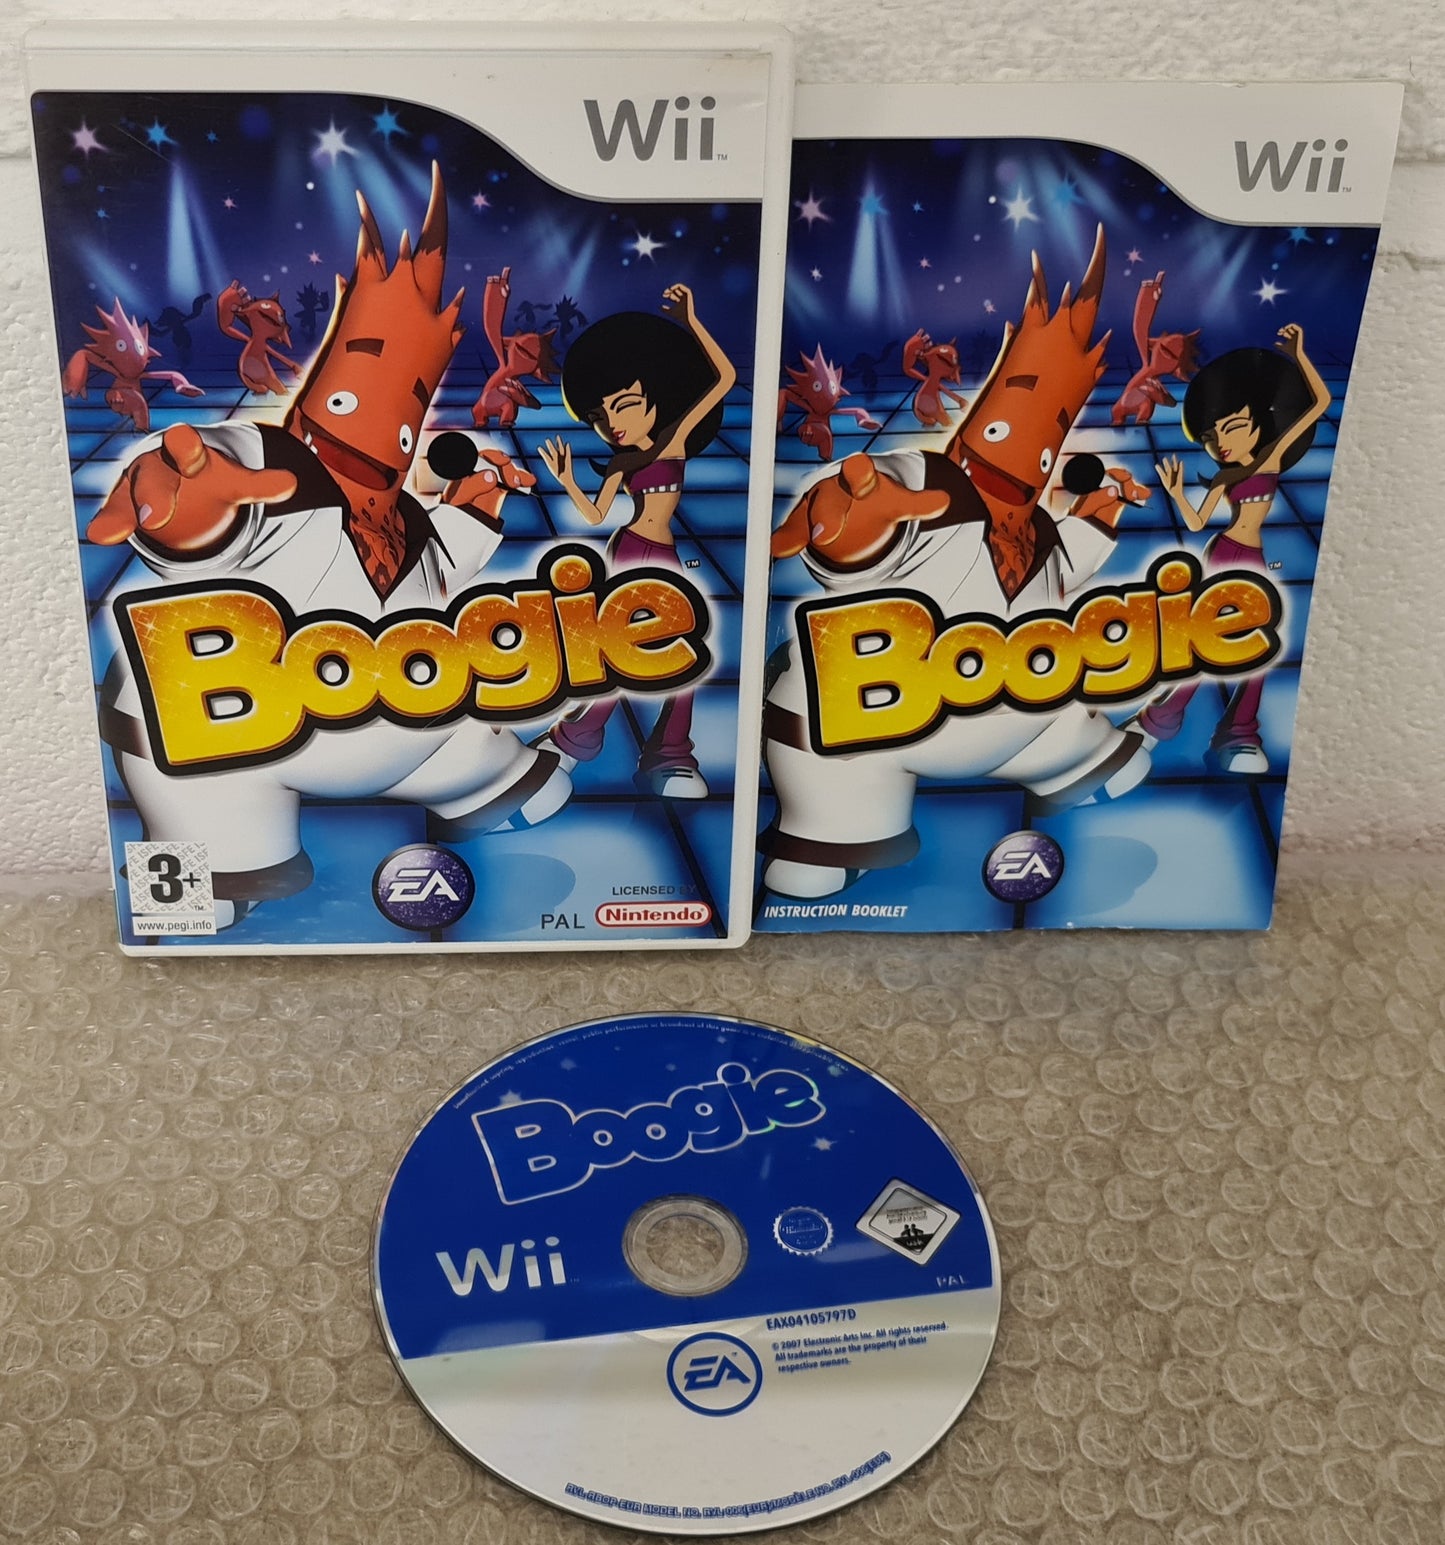 Boogie Nintendo Wii Game